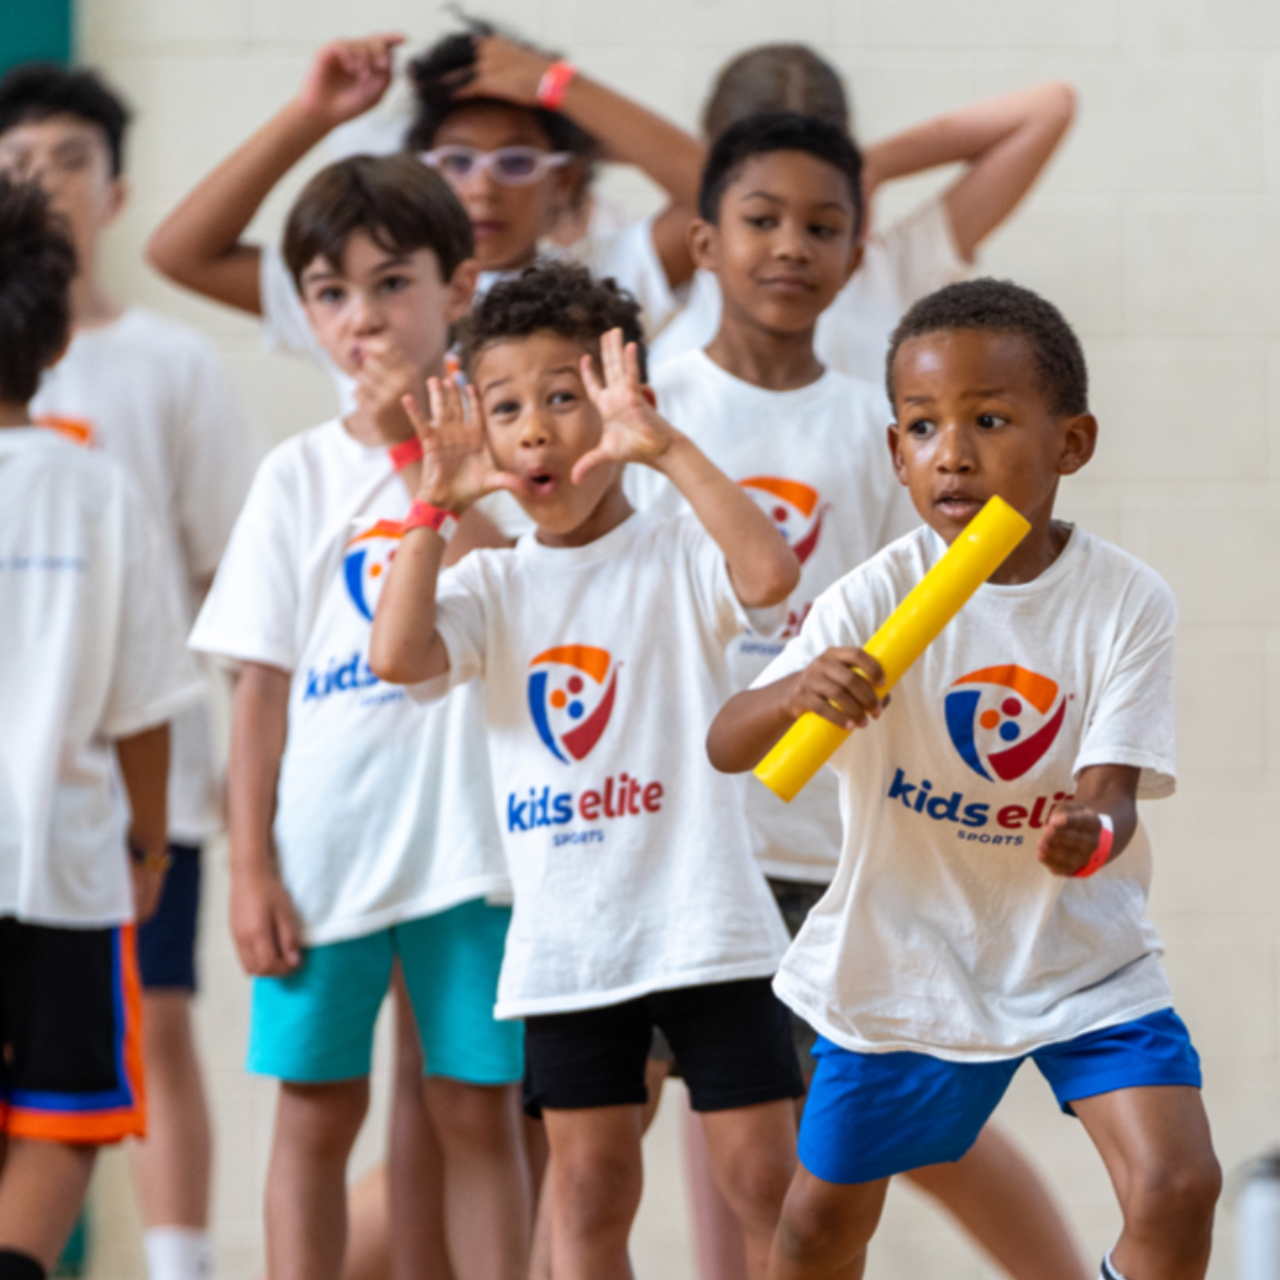 Kids Elite Sports - A Ball of Fun for Everyone!